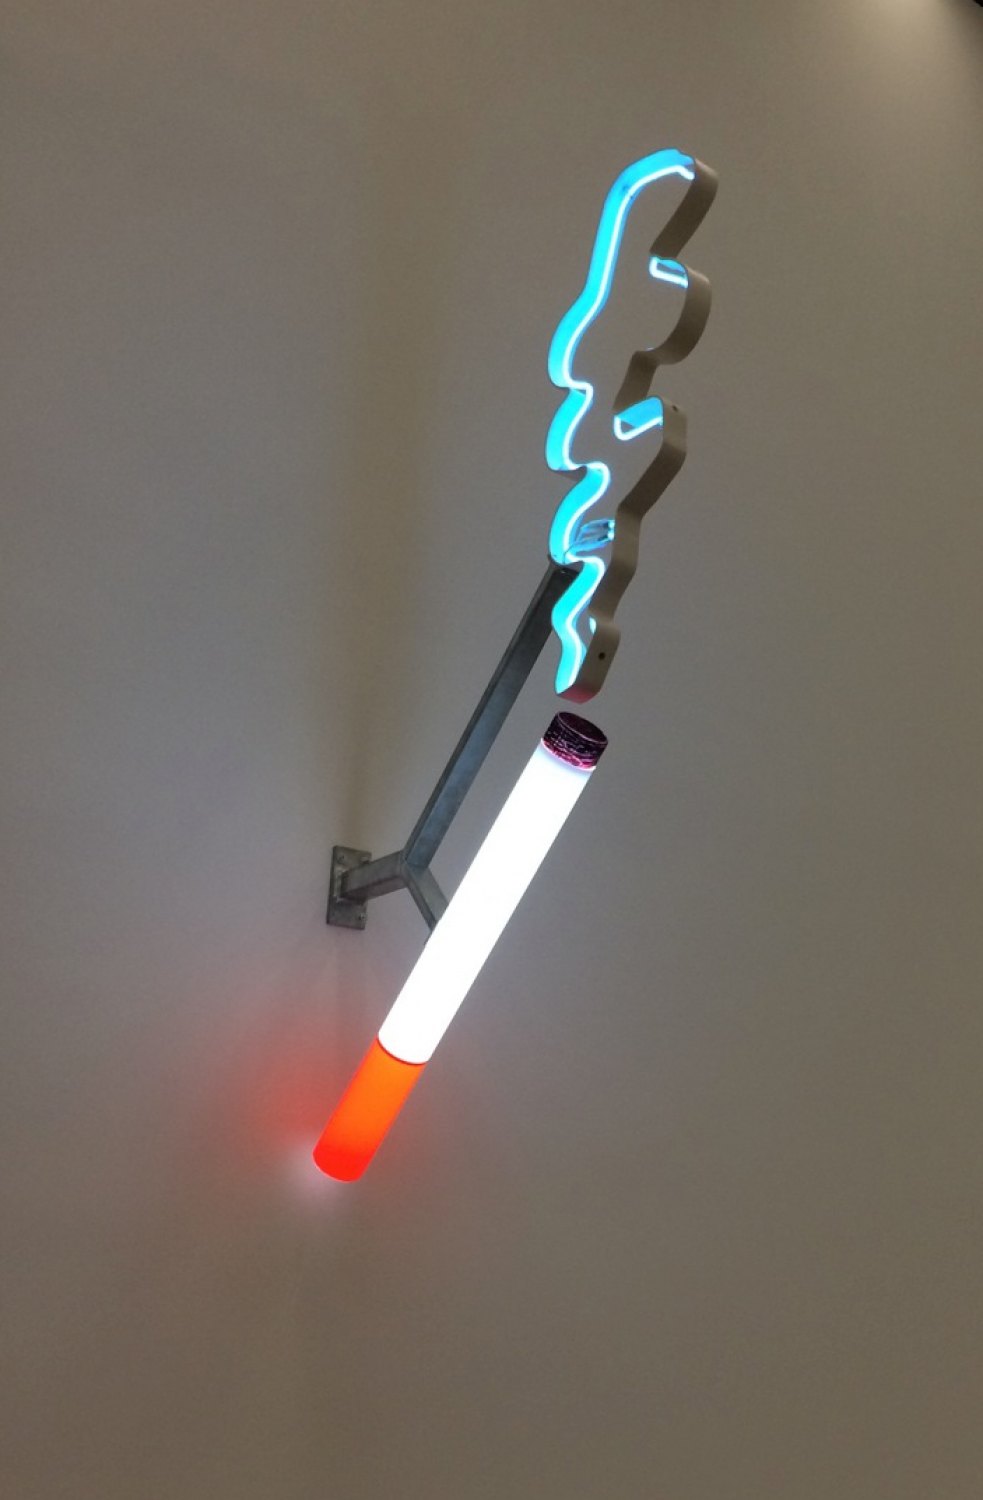 Cosima von Bonin   SMOKE, 2008  Acrylic, LED, neon and steel, 153 × 63 × 9 cm 